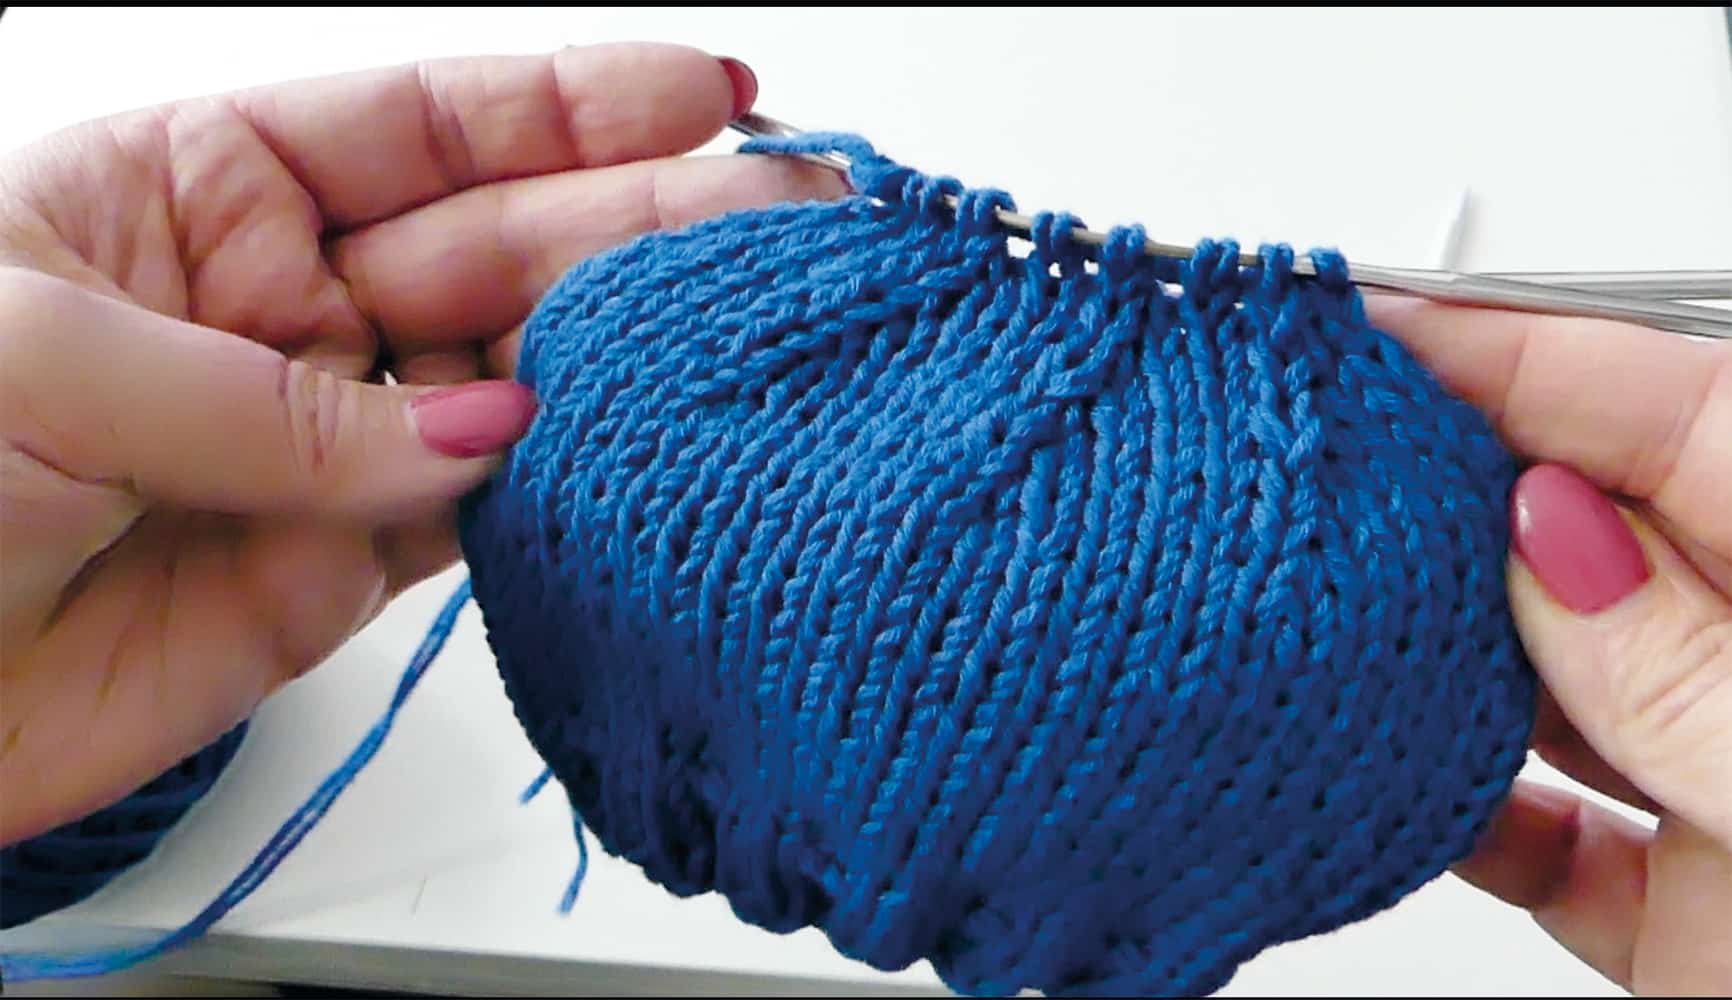 addiCraSyTrioLONG 08 4c beanie hat knitting,beanie knitting tutorial,beanie knitting addiCraSyTrio,trio beanie knitting,beanie knitting for beginners